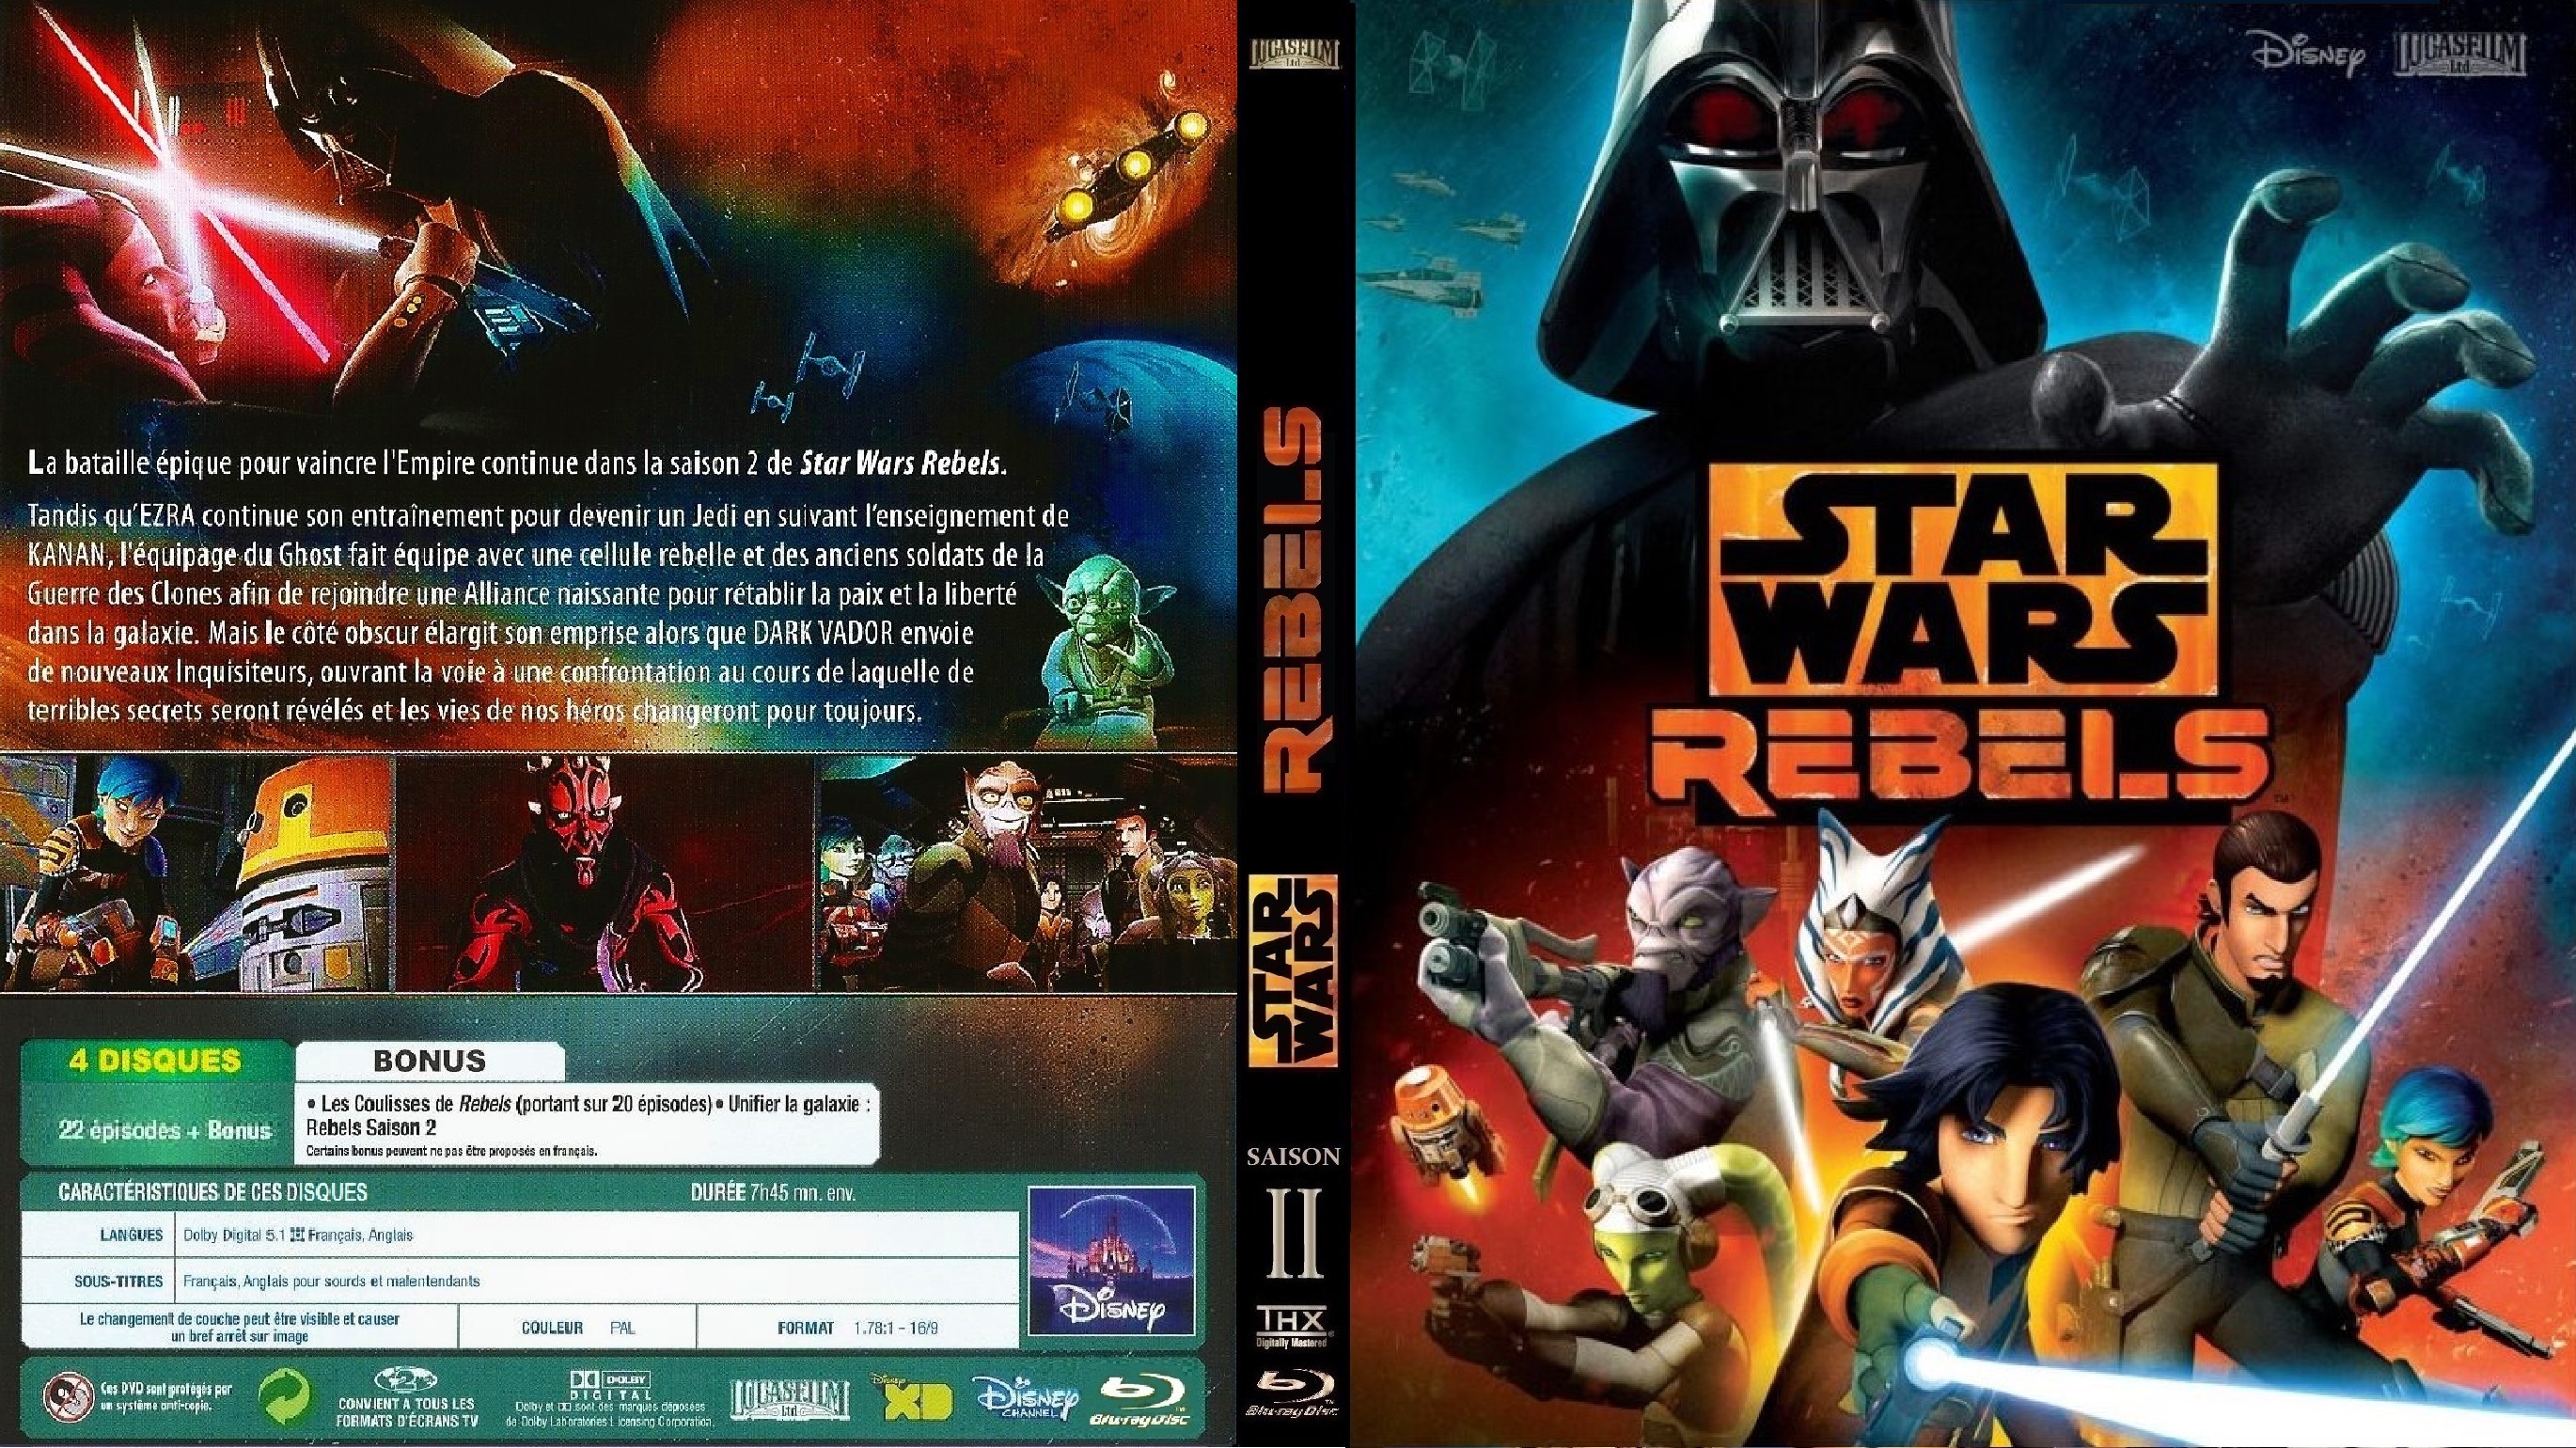 Jaquette DVD Star Wars Rebels saison 2 custom (BLU-RAY) v2